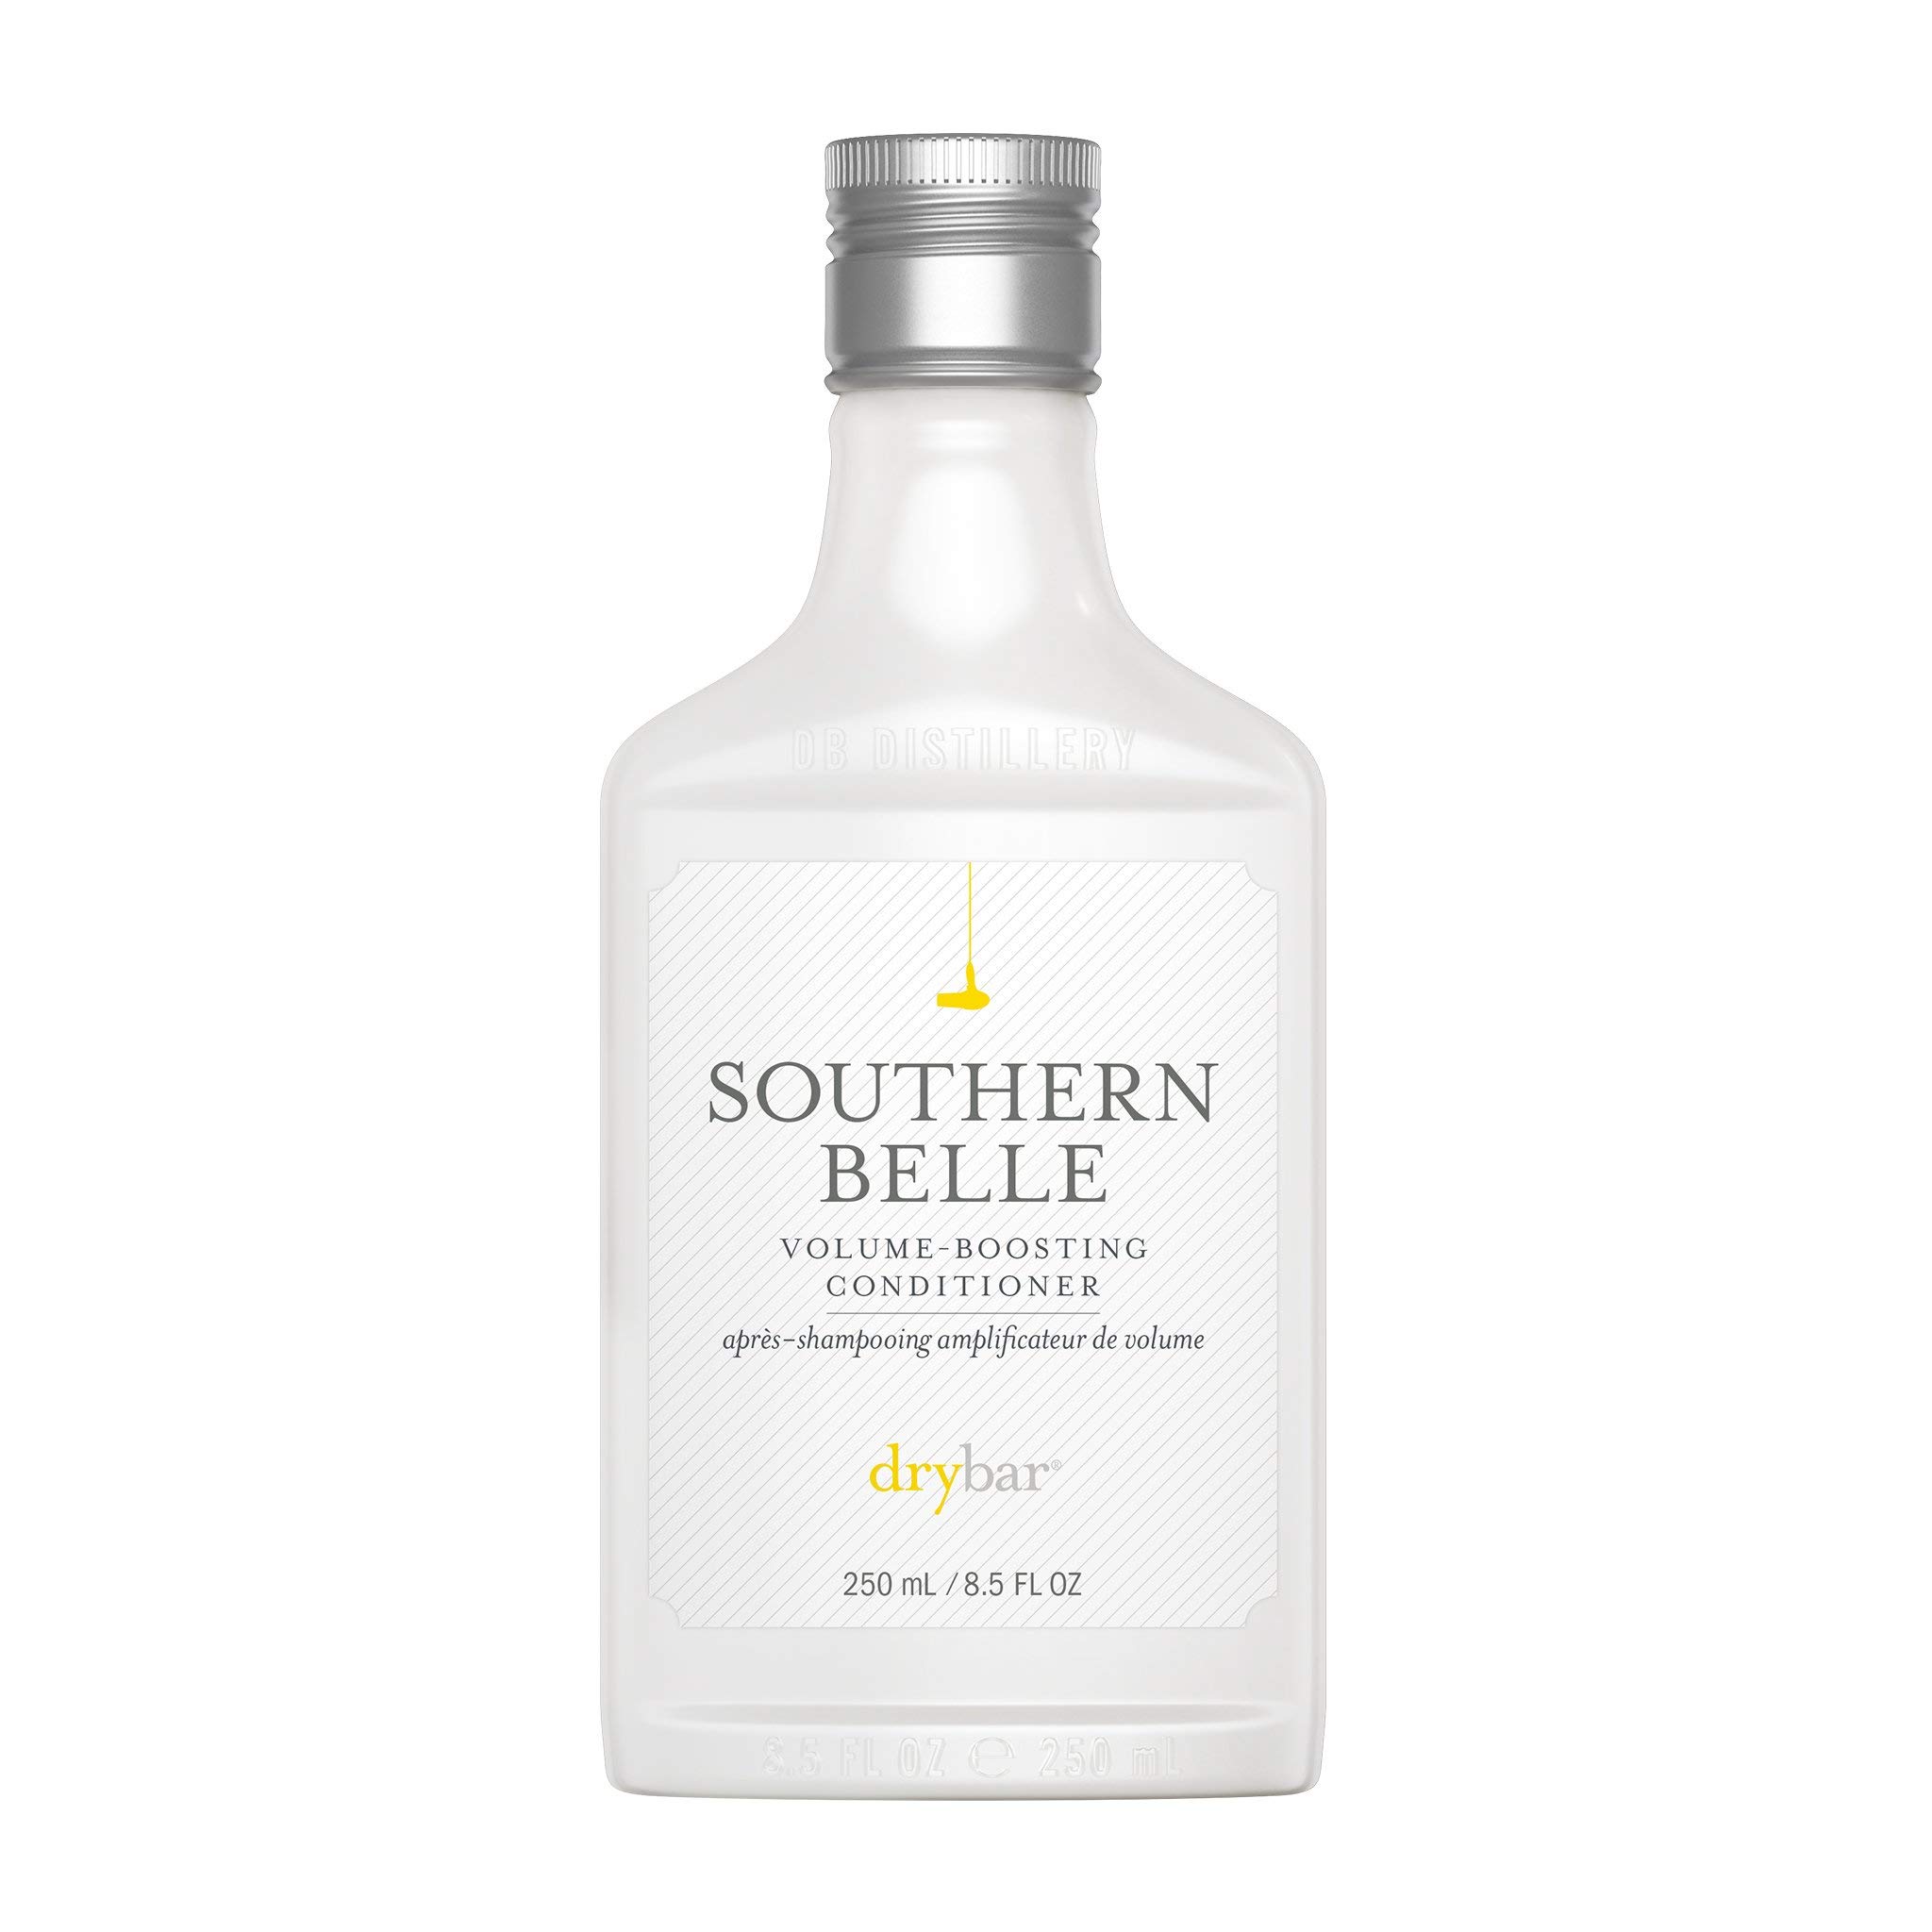 Drybar Southern Belle Volume-Boosting Conditioner